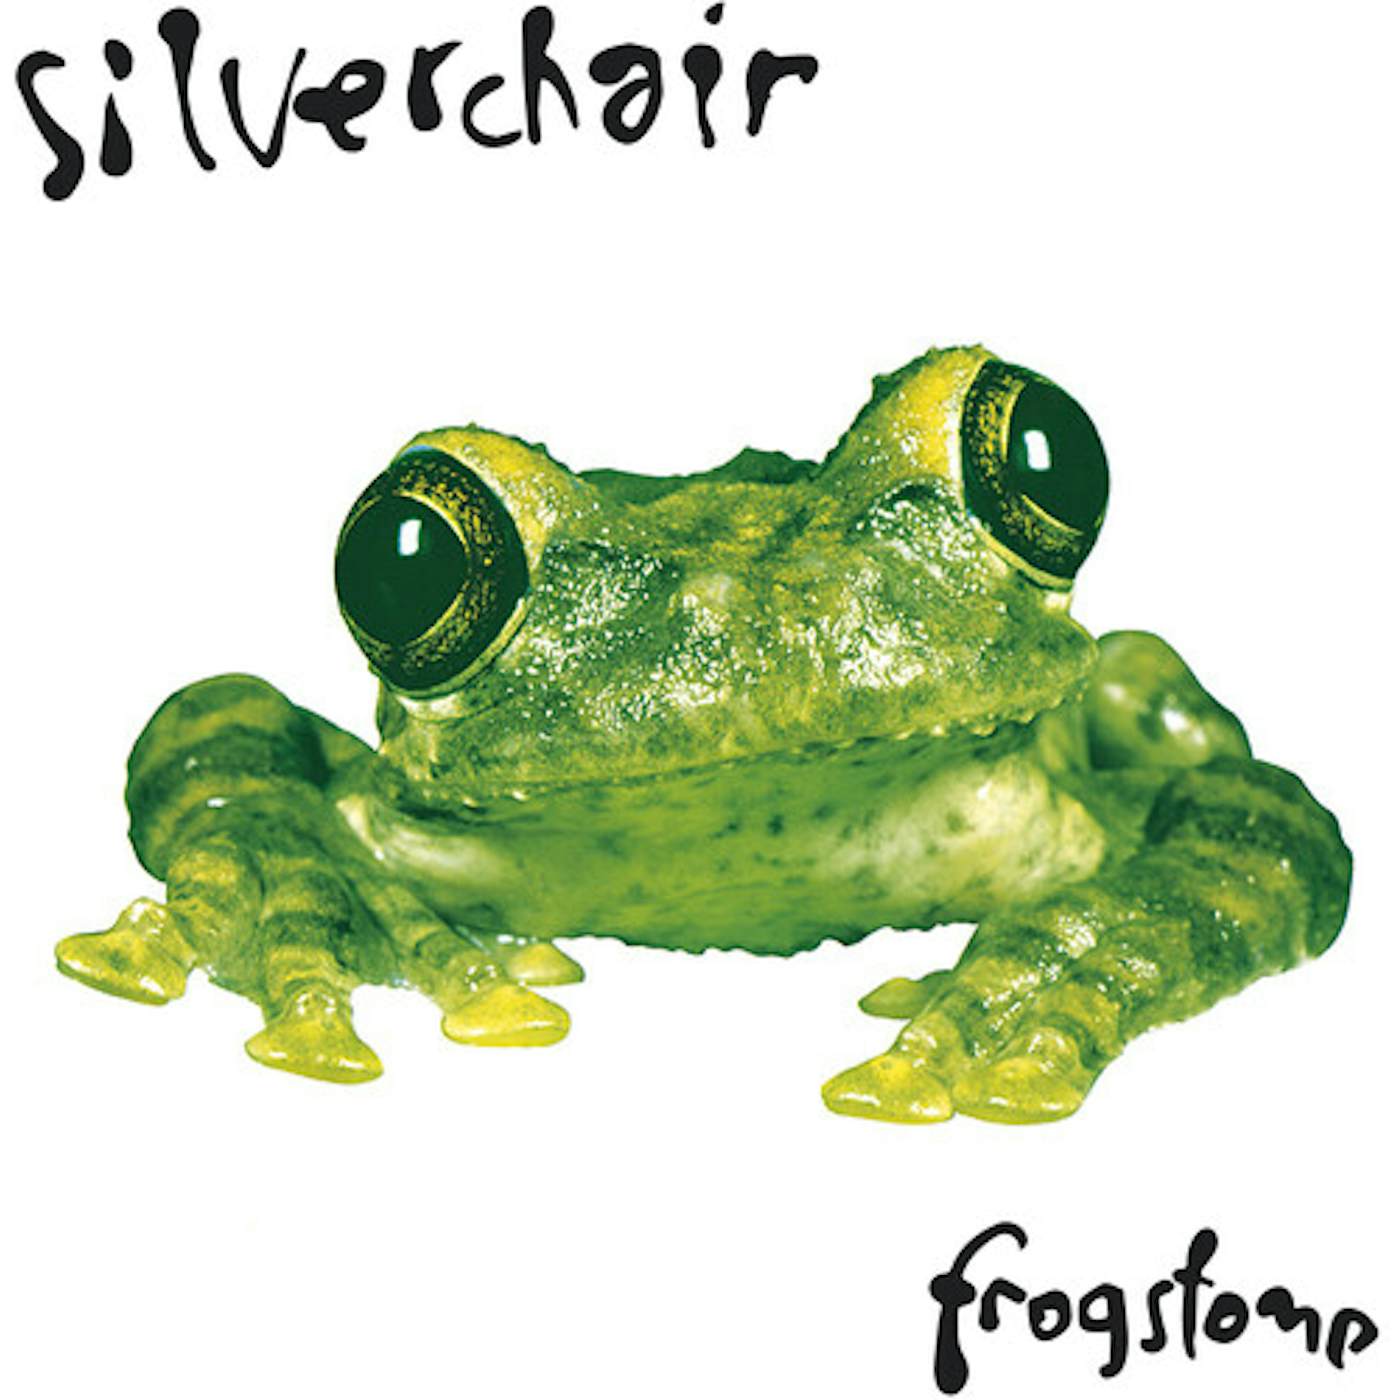 Silverchair FROGSTOMP (IMPORT) CD